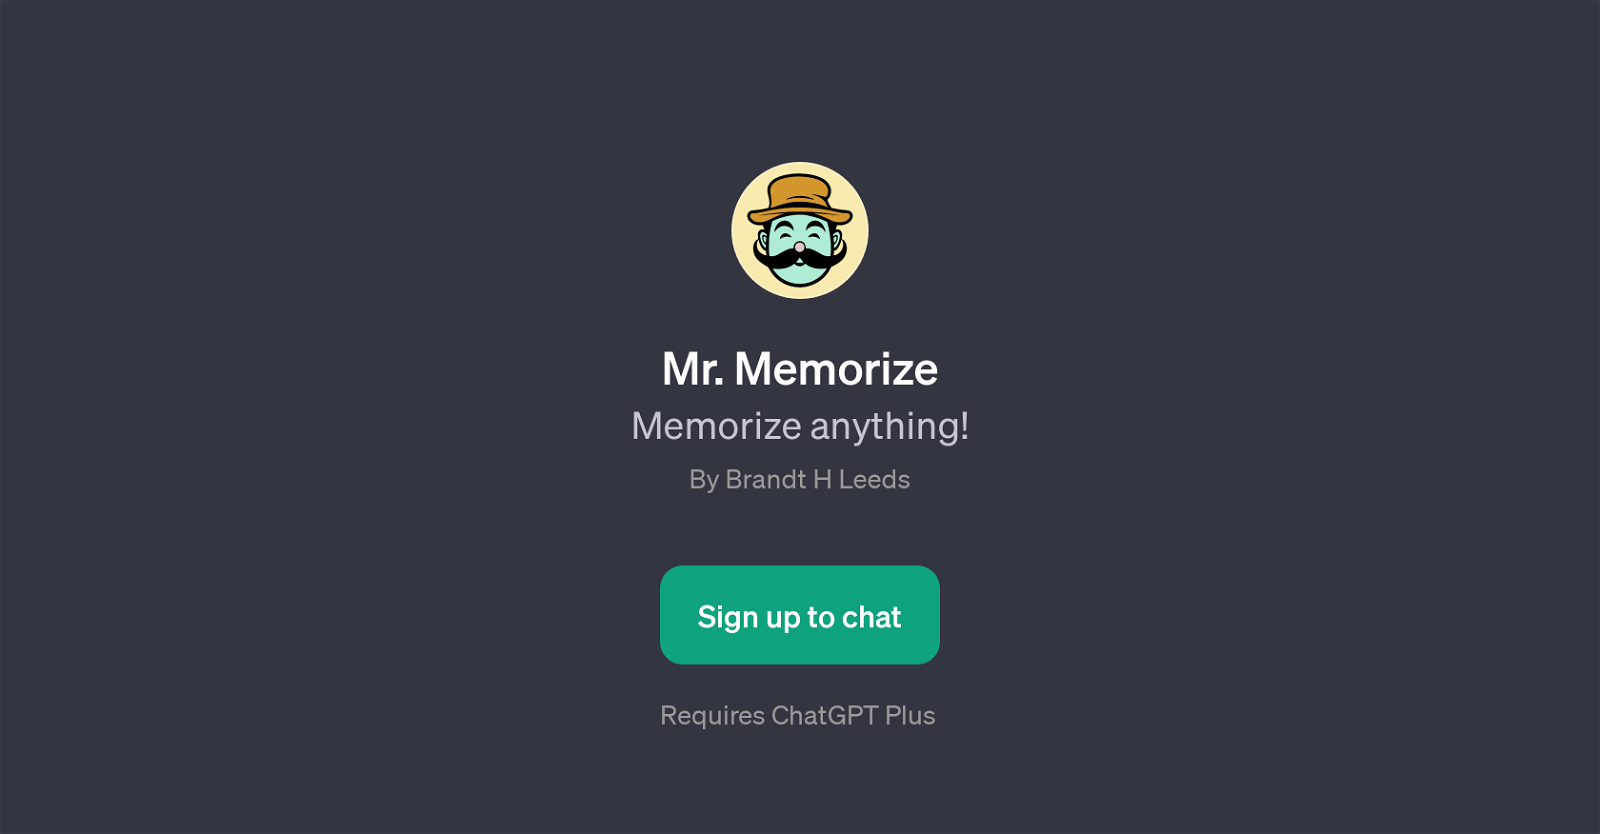 Mr. Memorize website